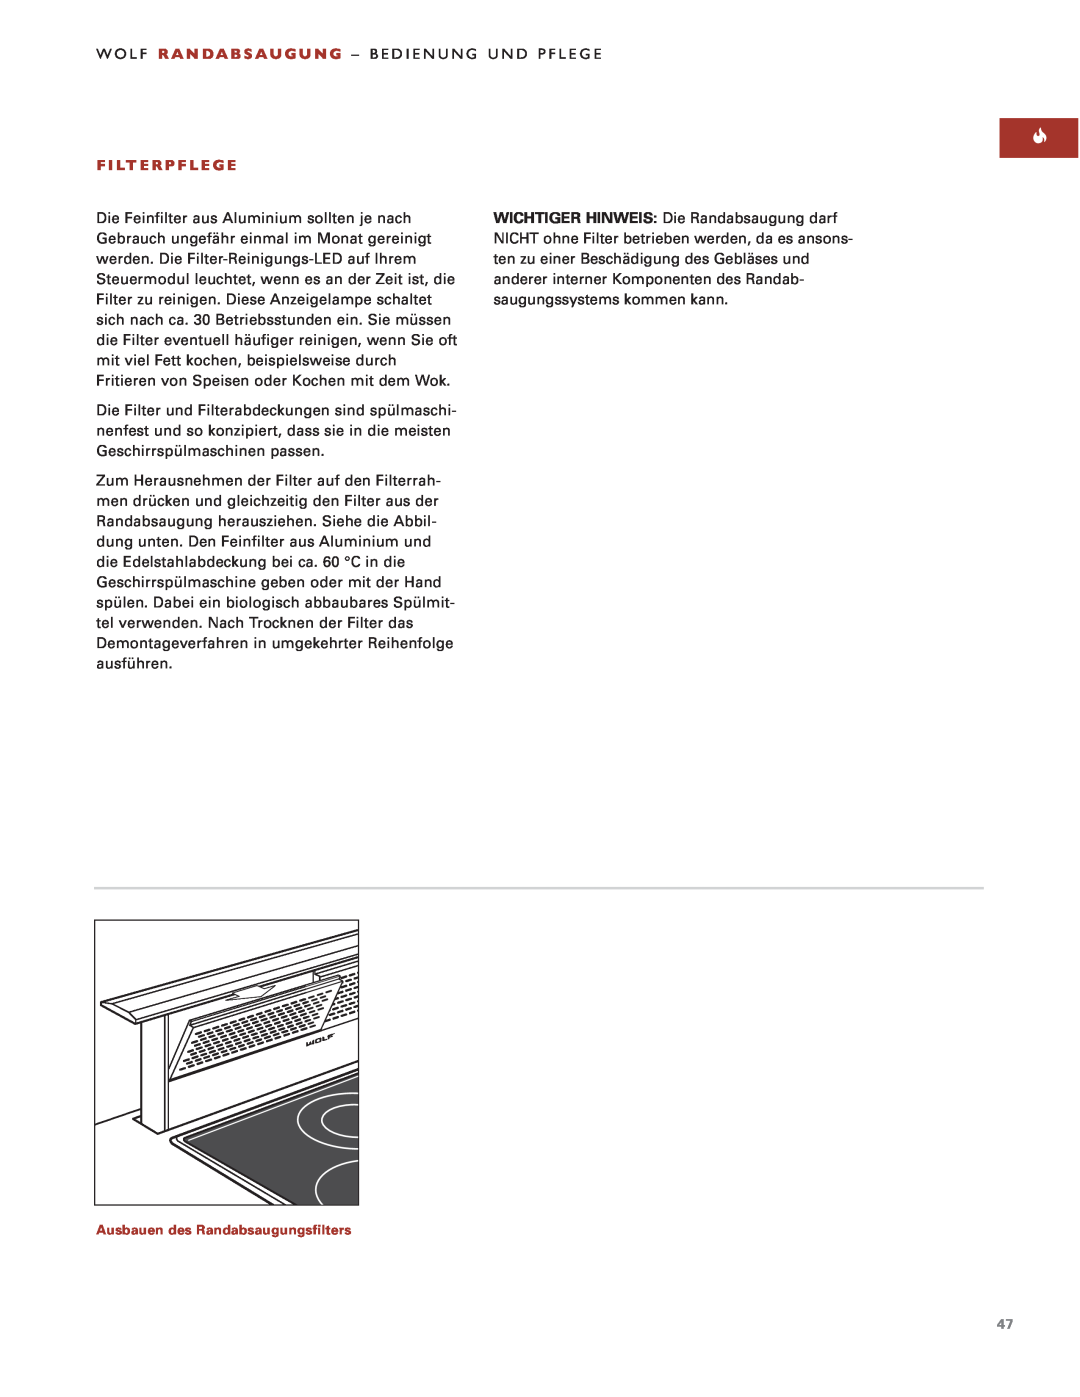 Sub-Zero Downdraft Ventilation manual F I Lt E R P F L E G E, Ausbauen des Randabsaugungsfilters 